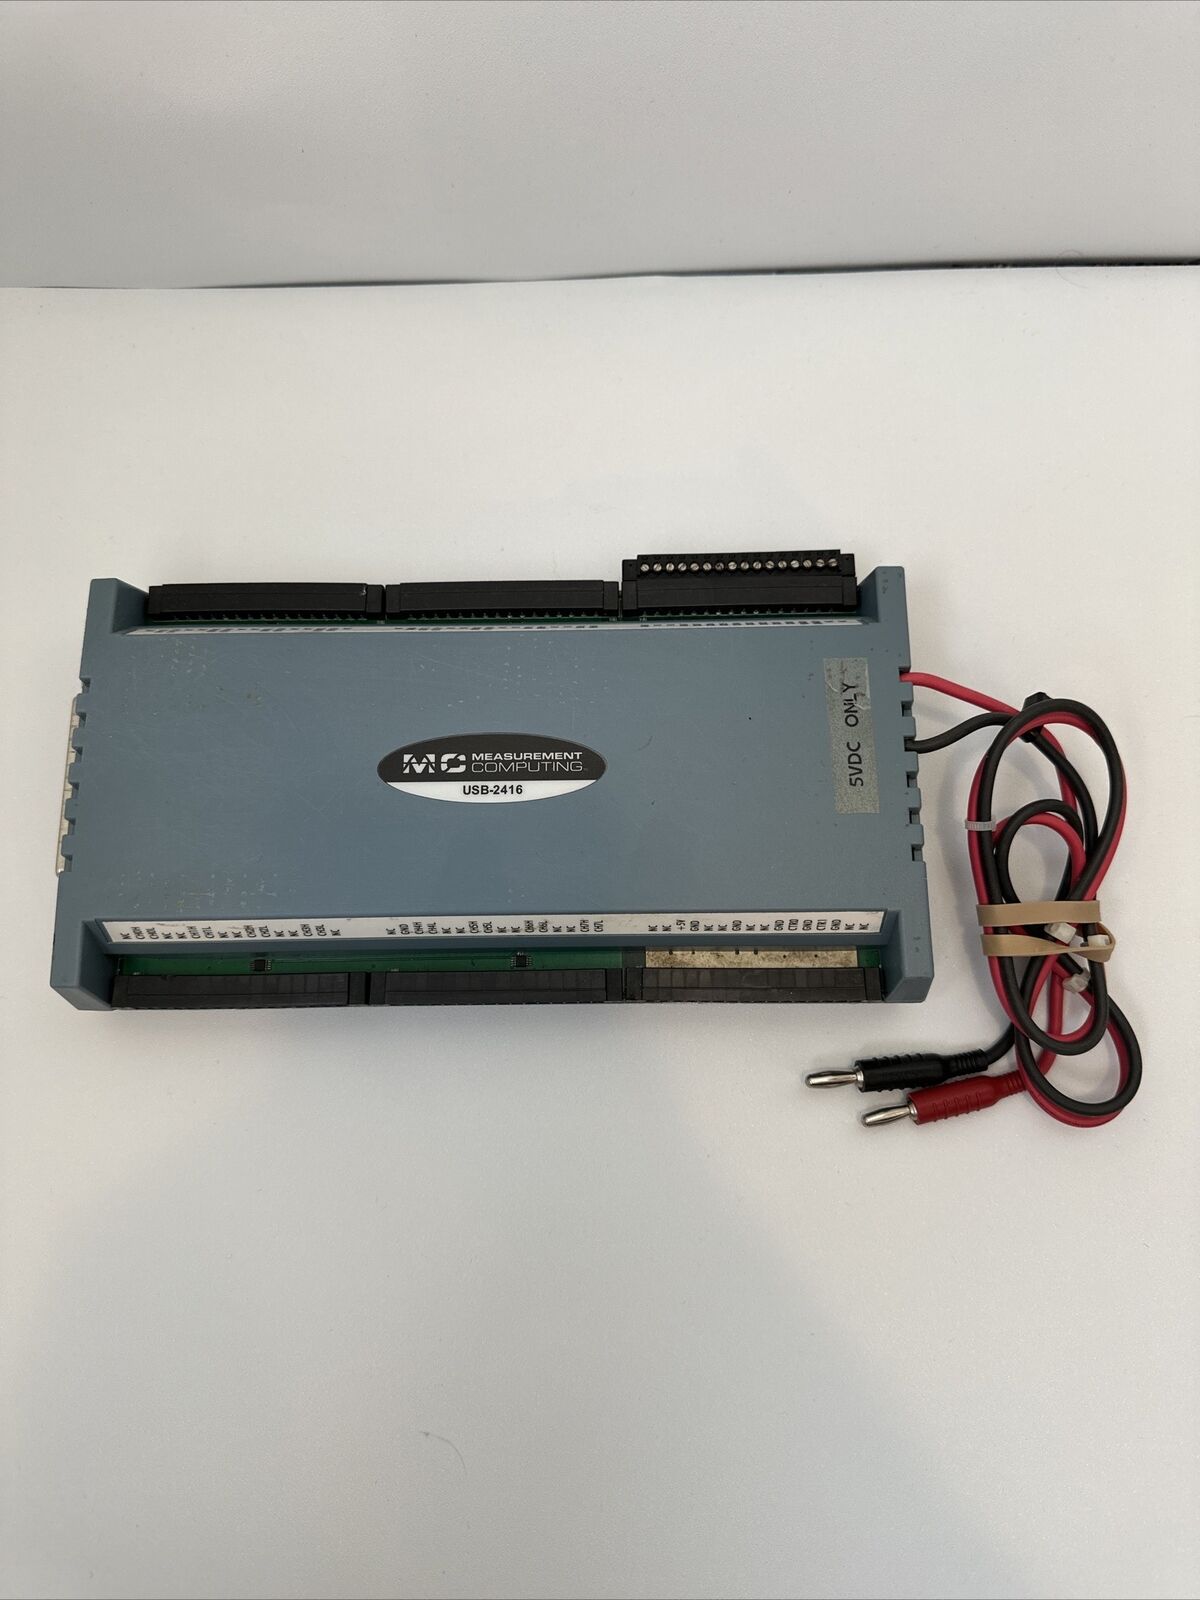 Measurement Computing USB-2416-USB Data Acquisition Module DAQ Temperature